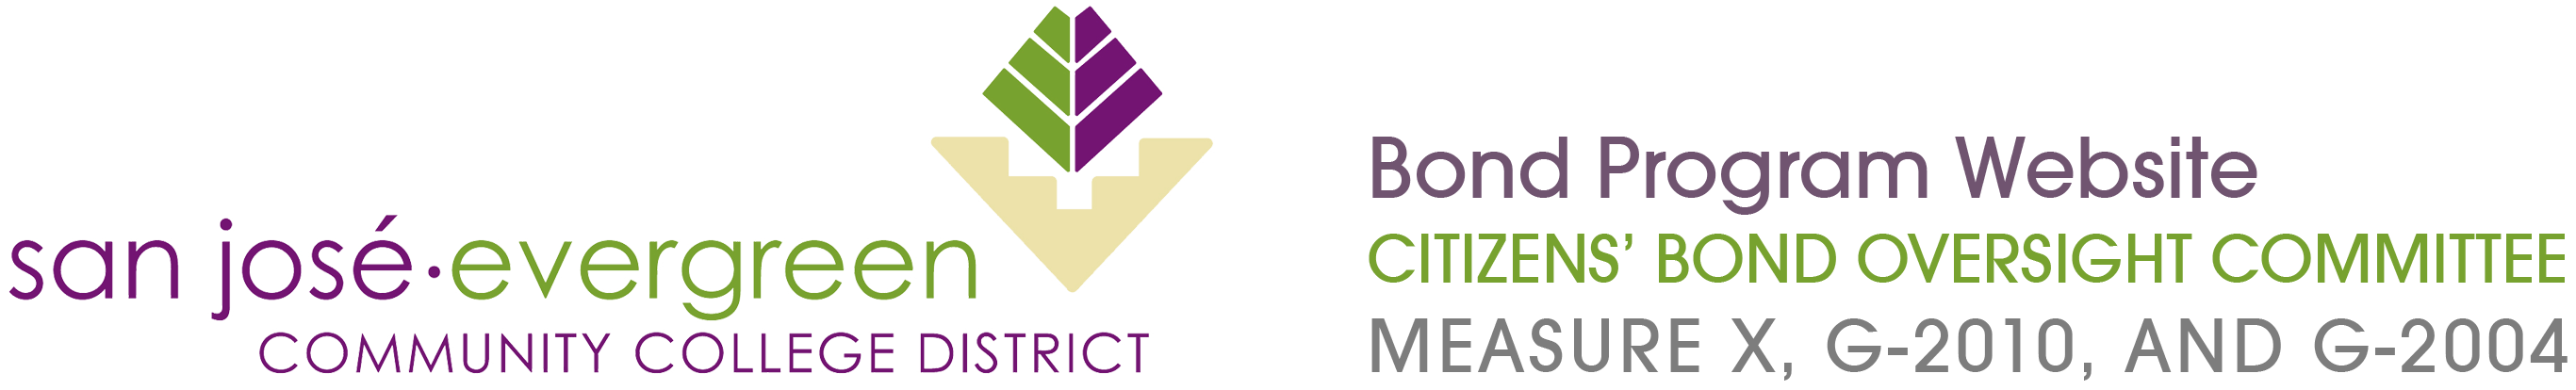 Bond Program Website: San Jose Evergreen Community College District